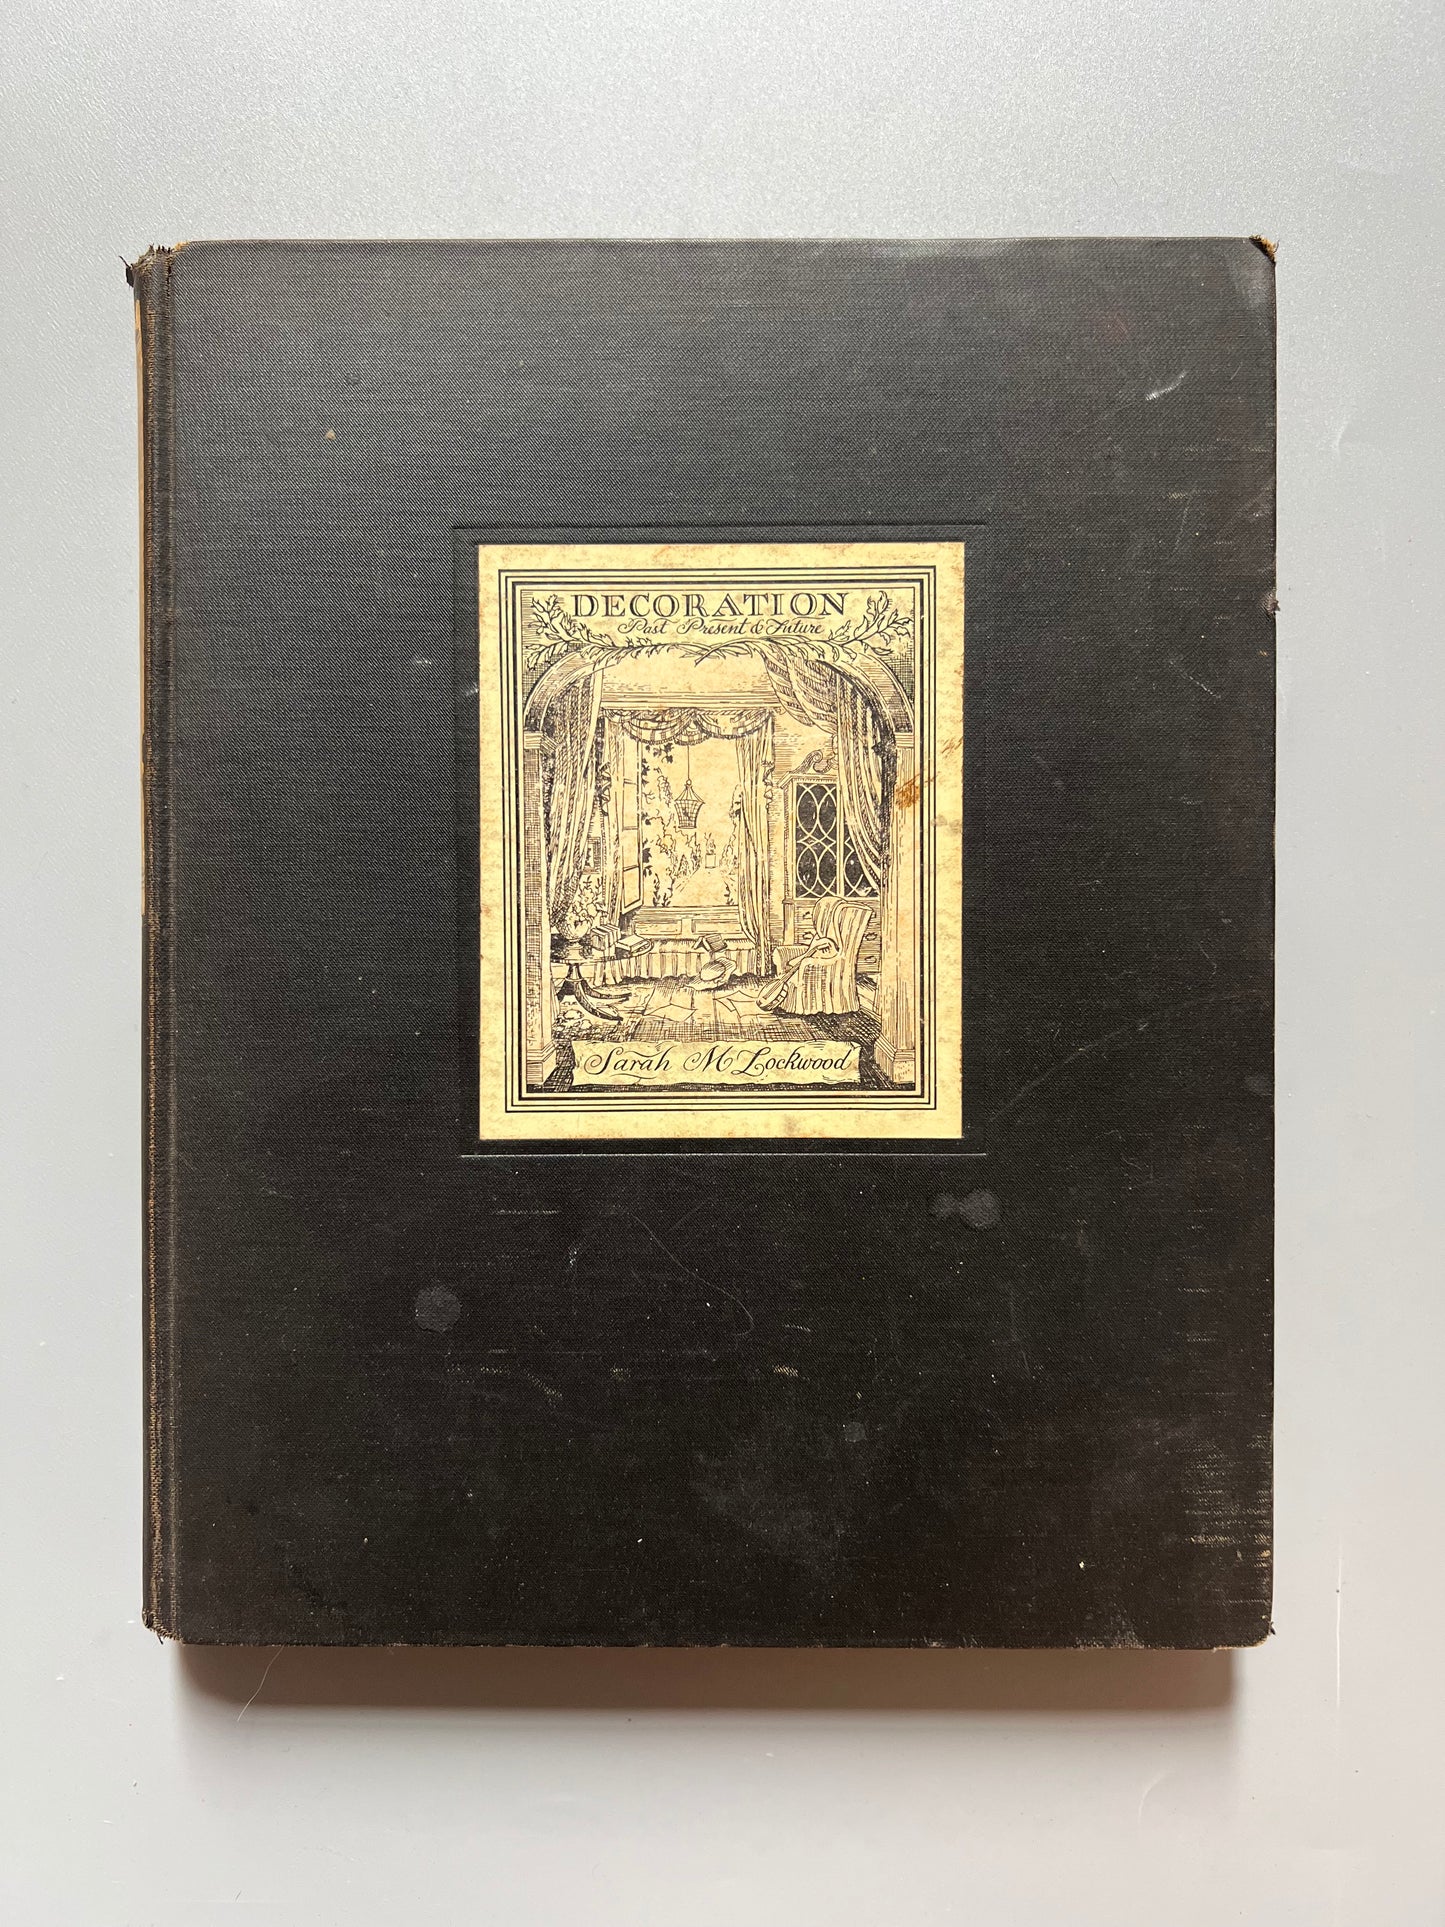 Decoration. Past, present & future, Sarah M. Lockwood - Doubleday, Doran & Company inc, 1934